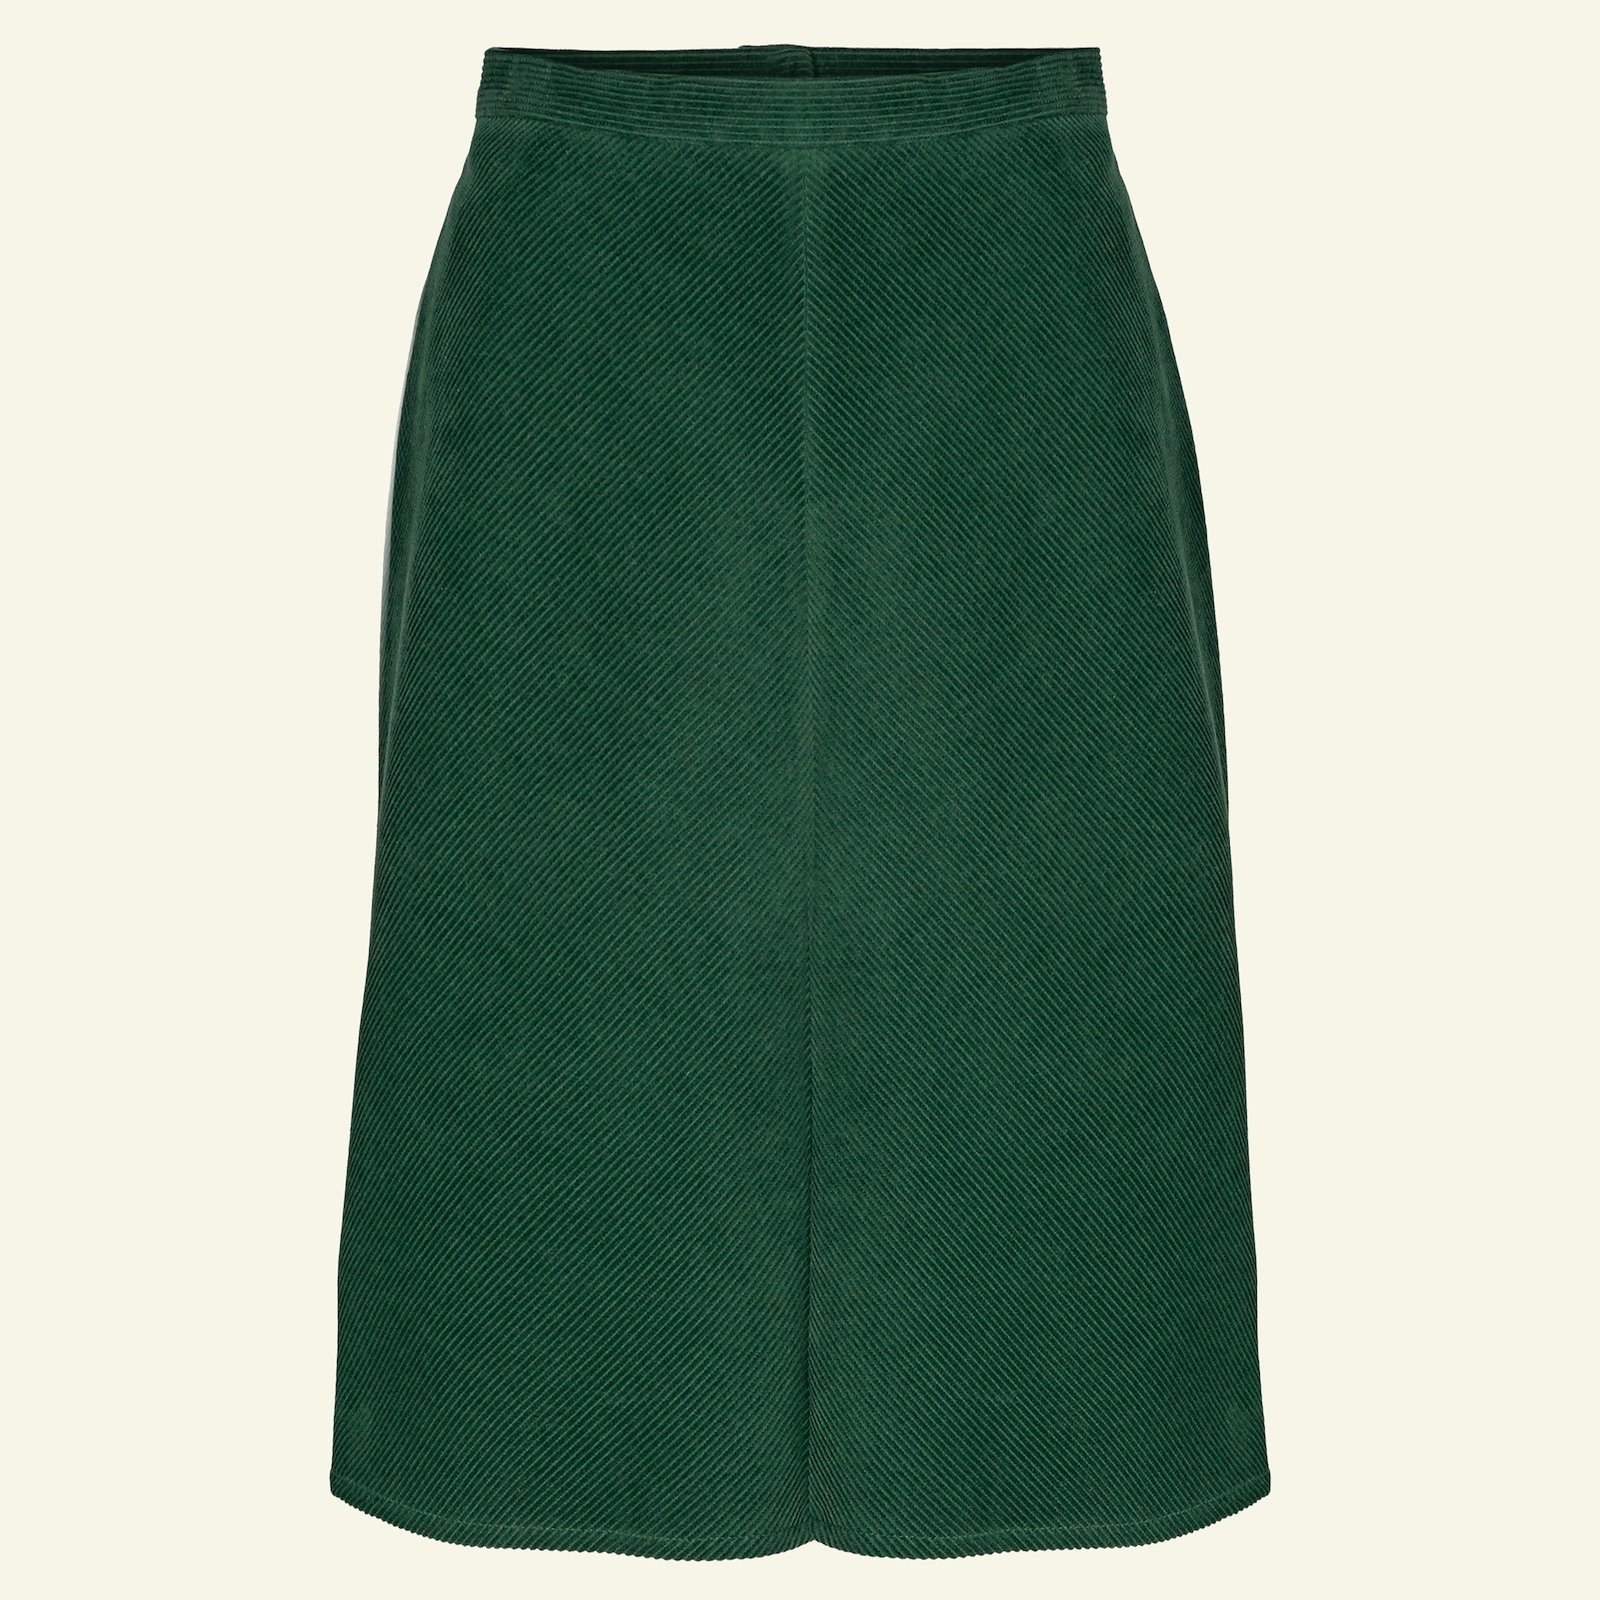 Skirt with A-shape, 42/14 p21038_430819_sskit